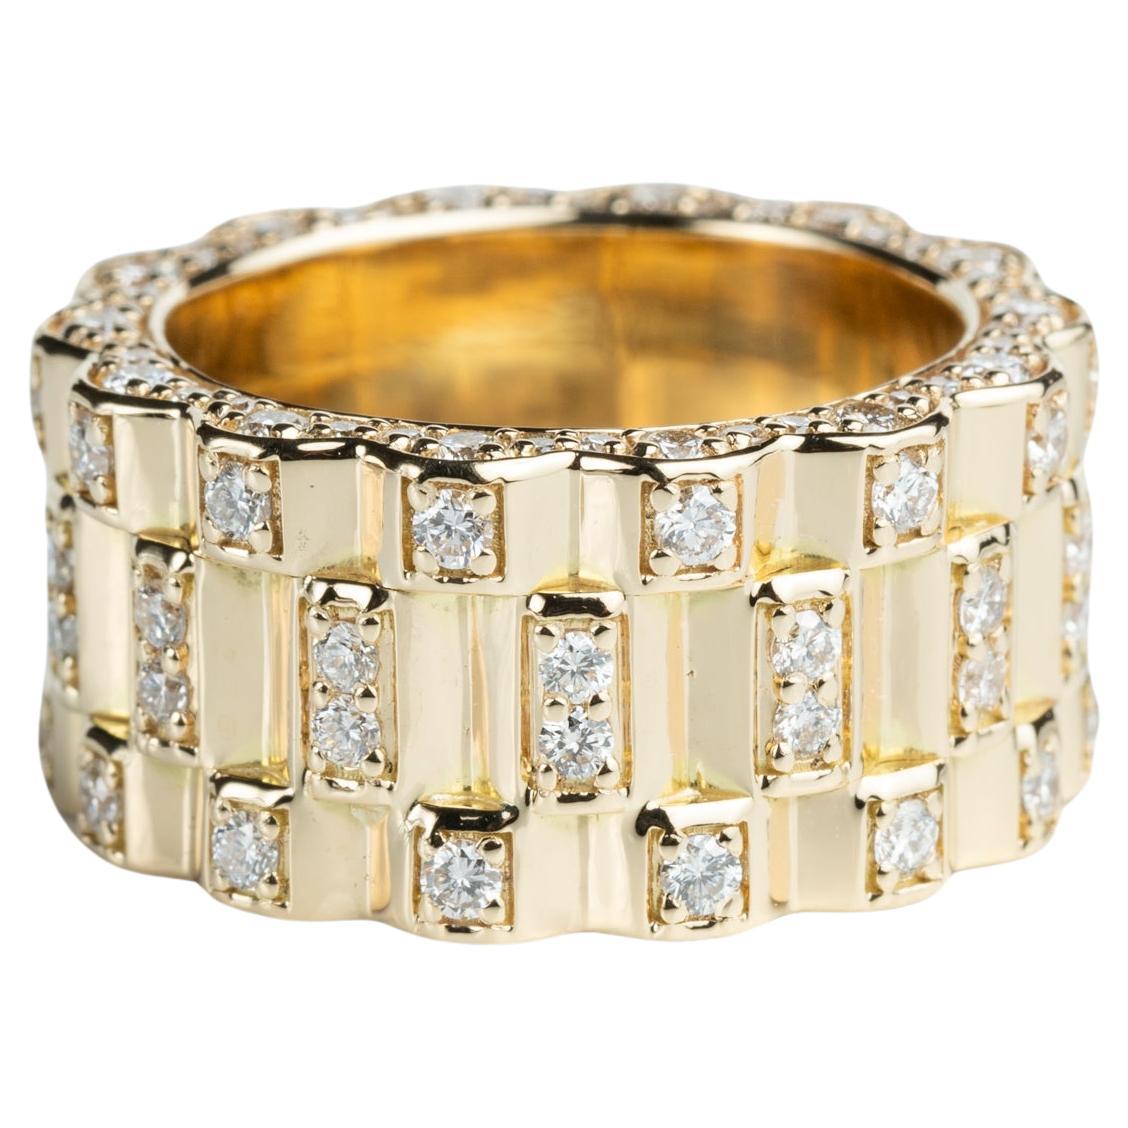 Mens diamond wedding ring in 18k yellow gold, pinky band 